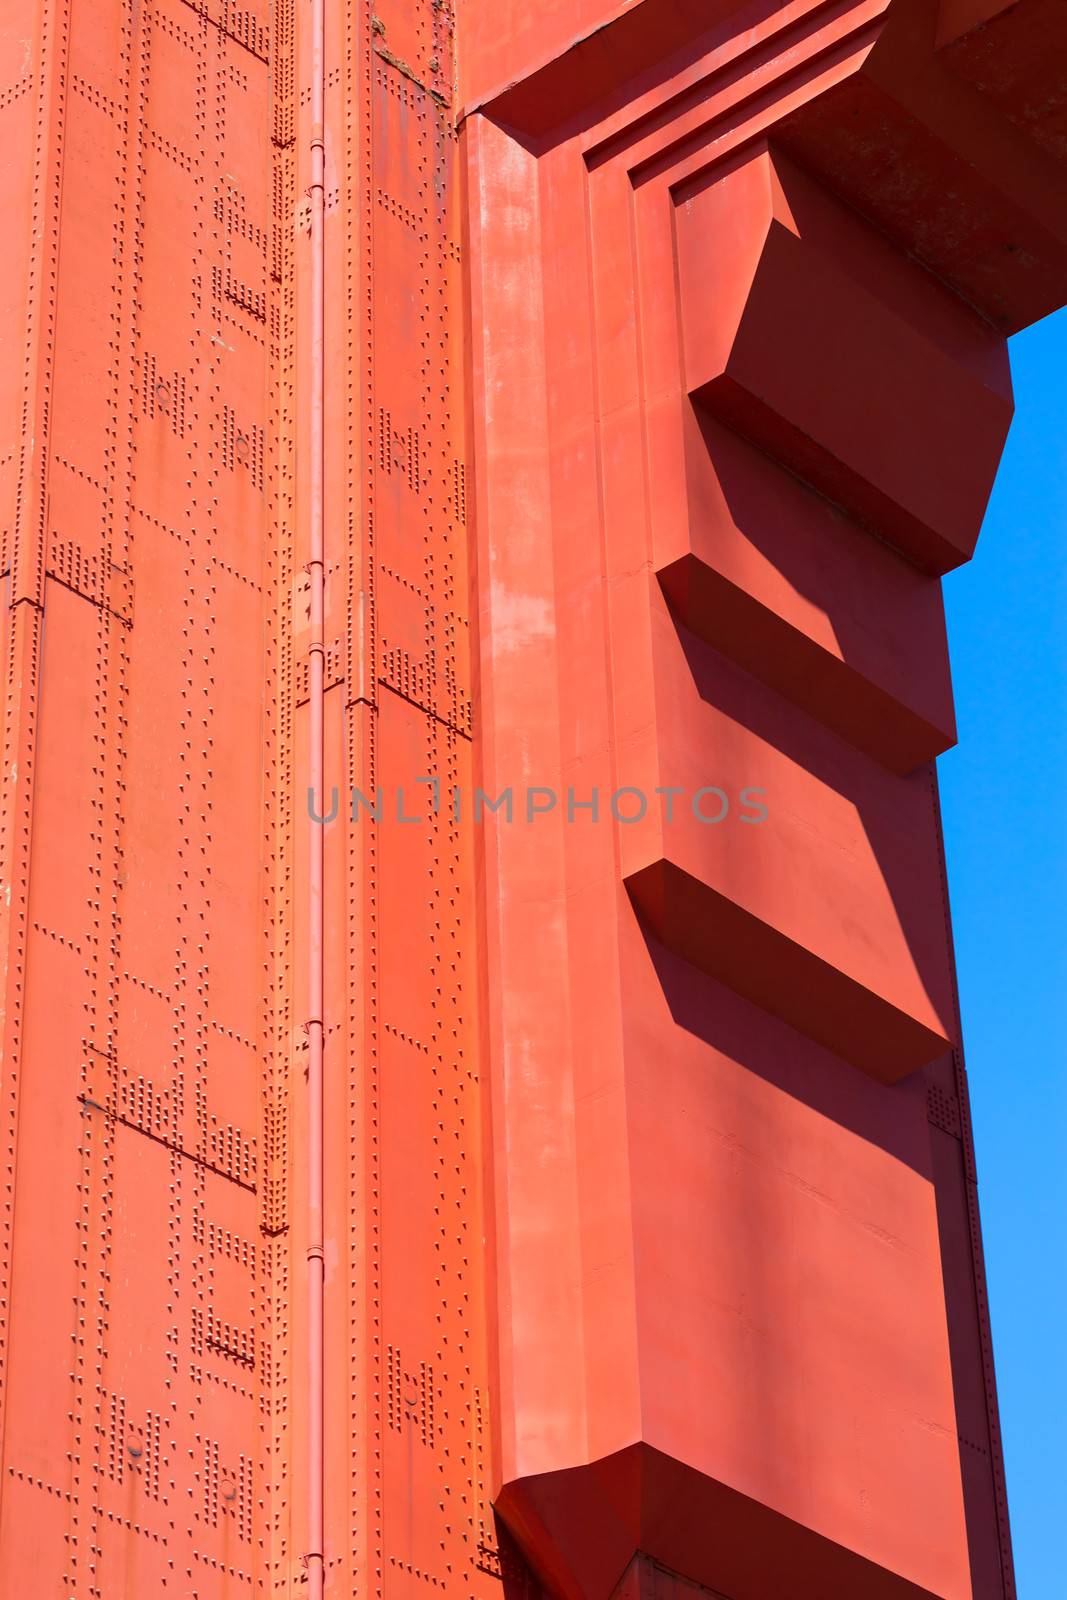 Golden Gate Bridge details in San Francisco California by lunamarina